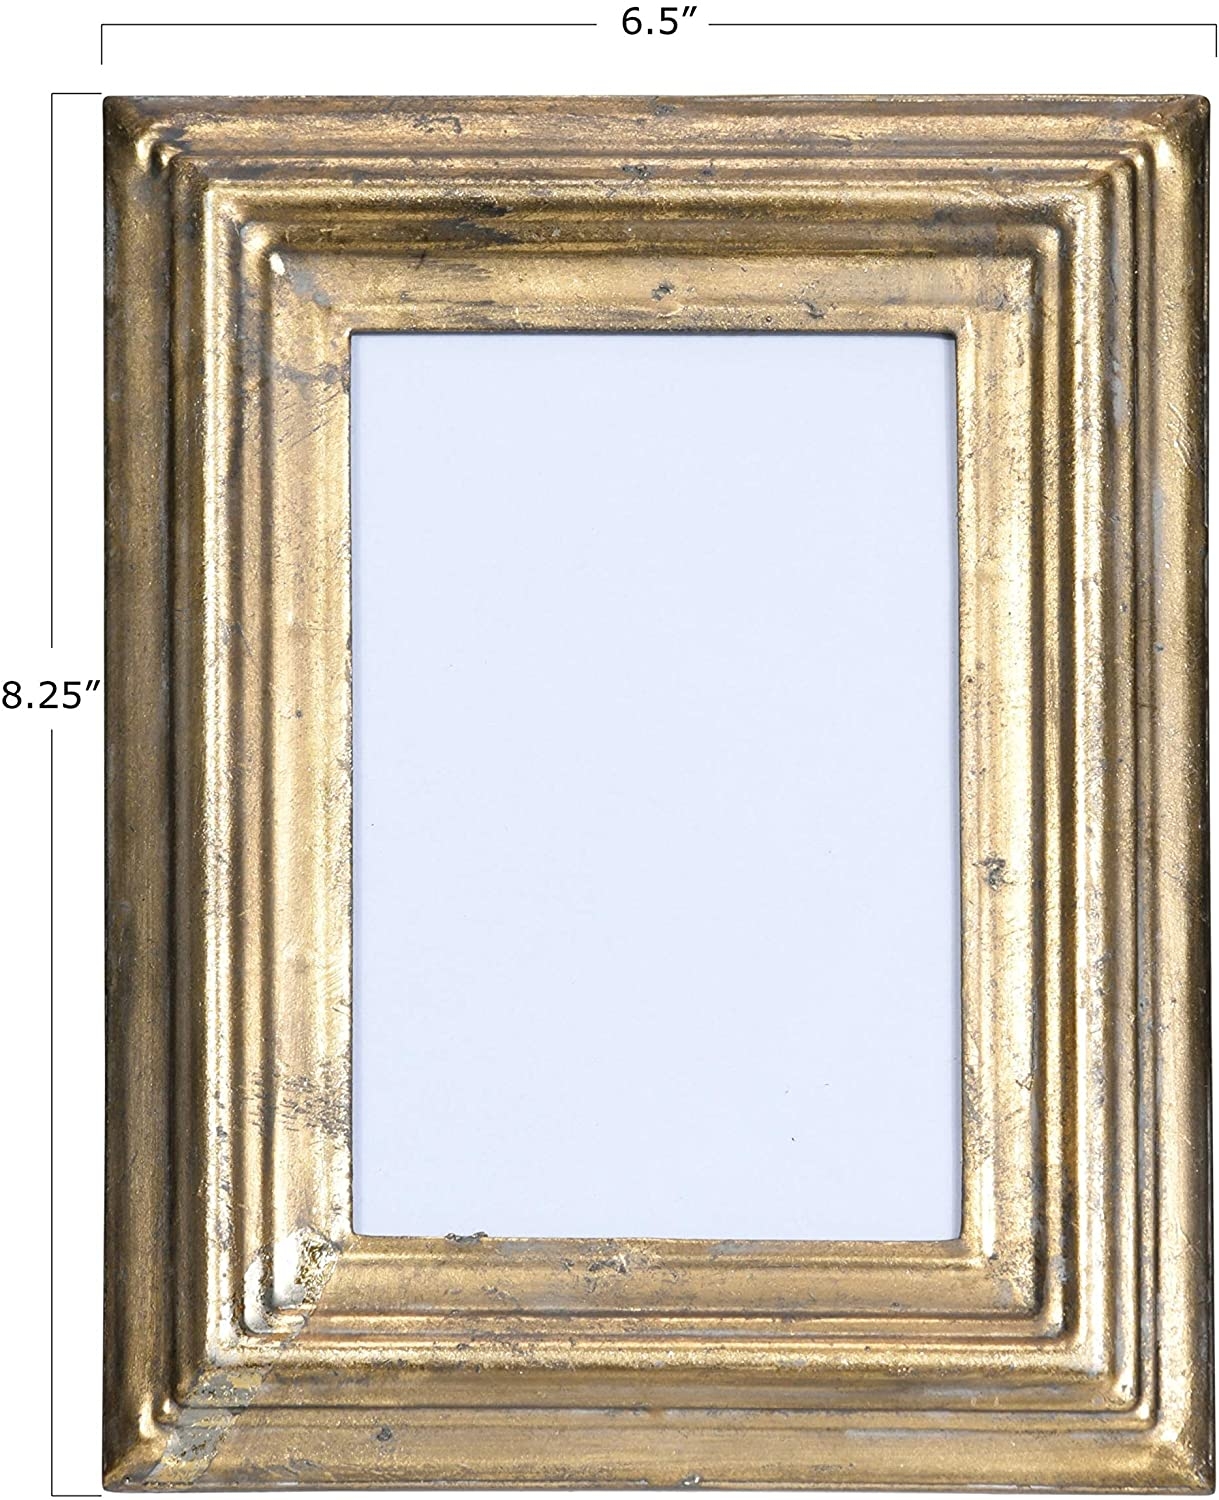 Juneau Antiqued Picture Frame, Gold, 4" x 6" - Image 1